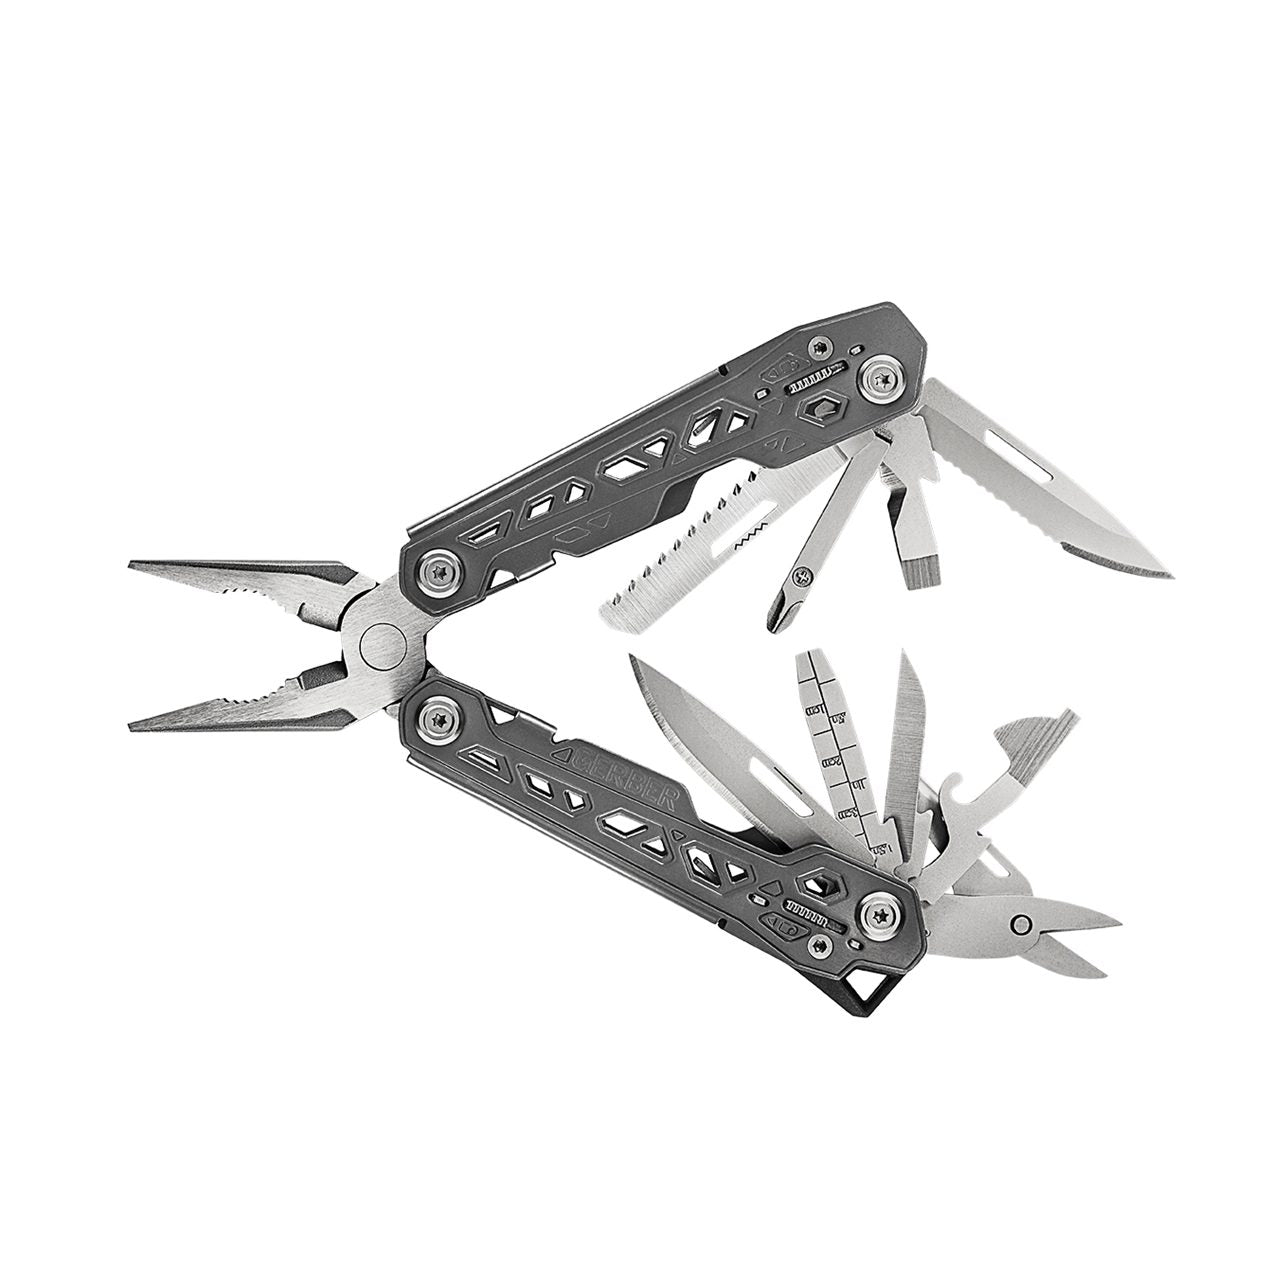 Gerber Gear Truss Multi-Tool - Knives